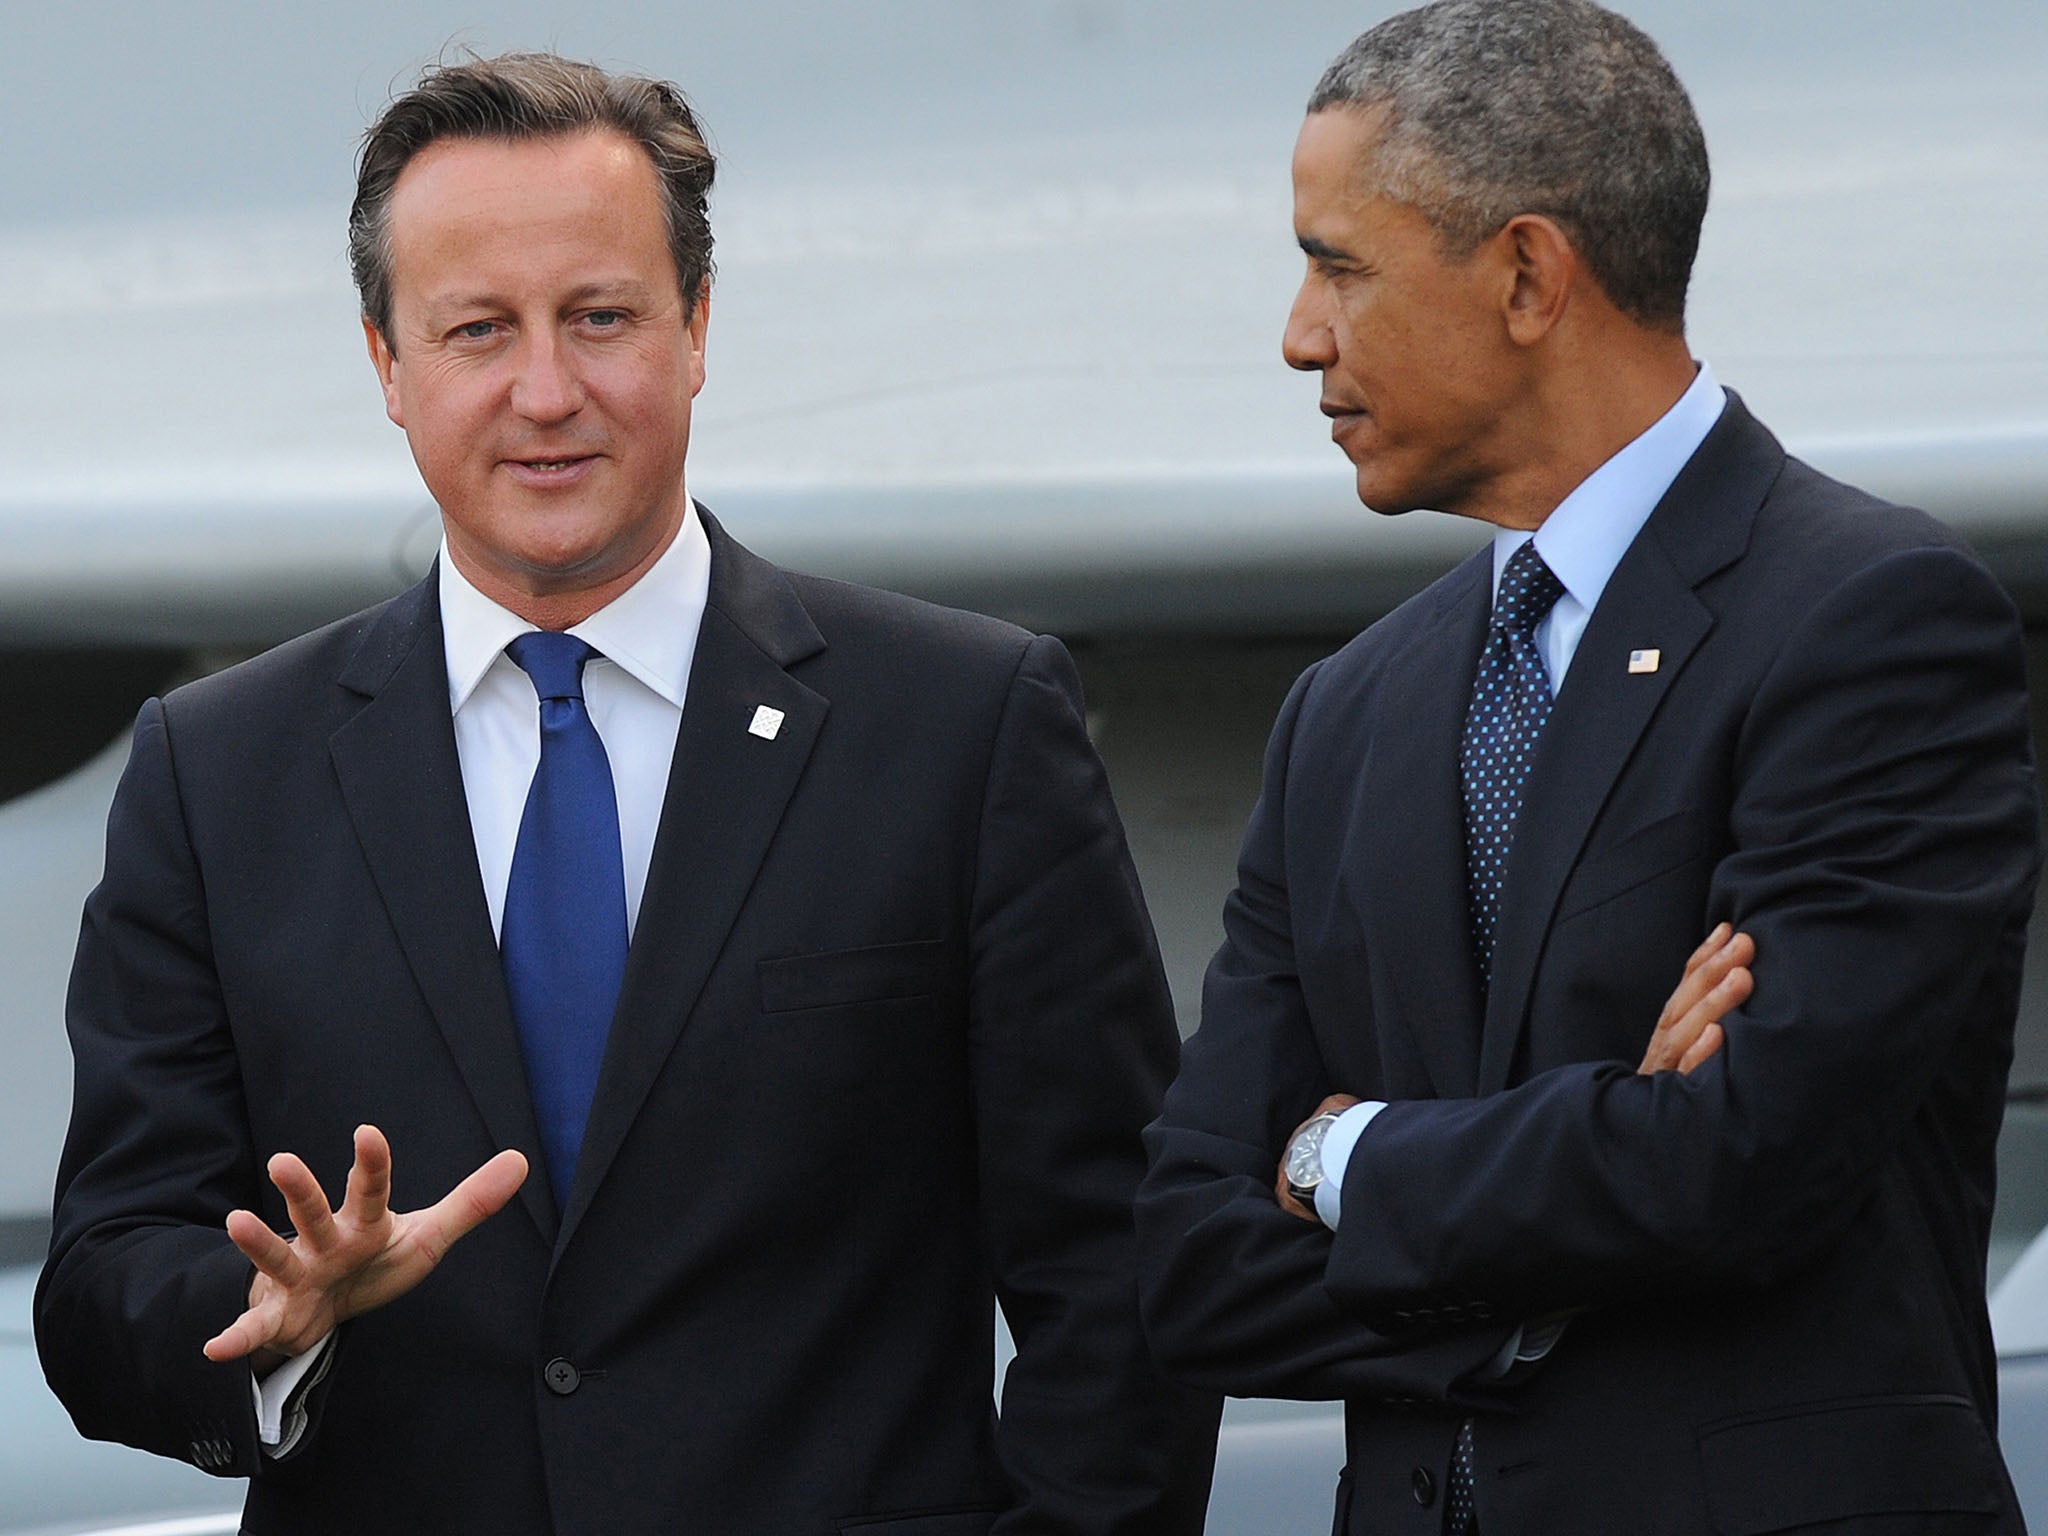 Barack Obama and David Cameron talking in 2014